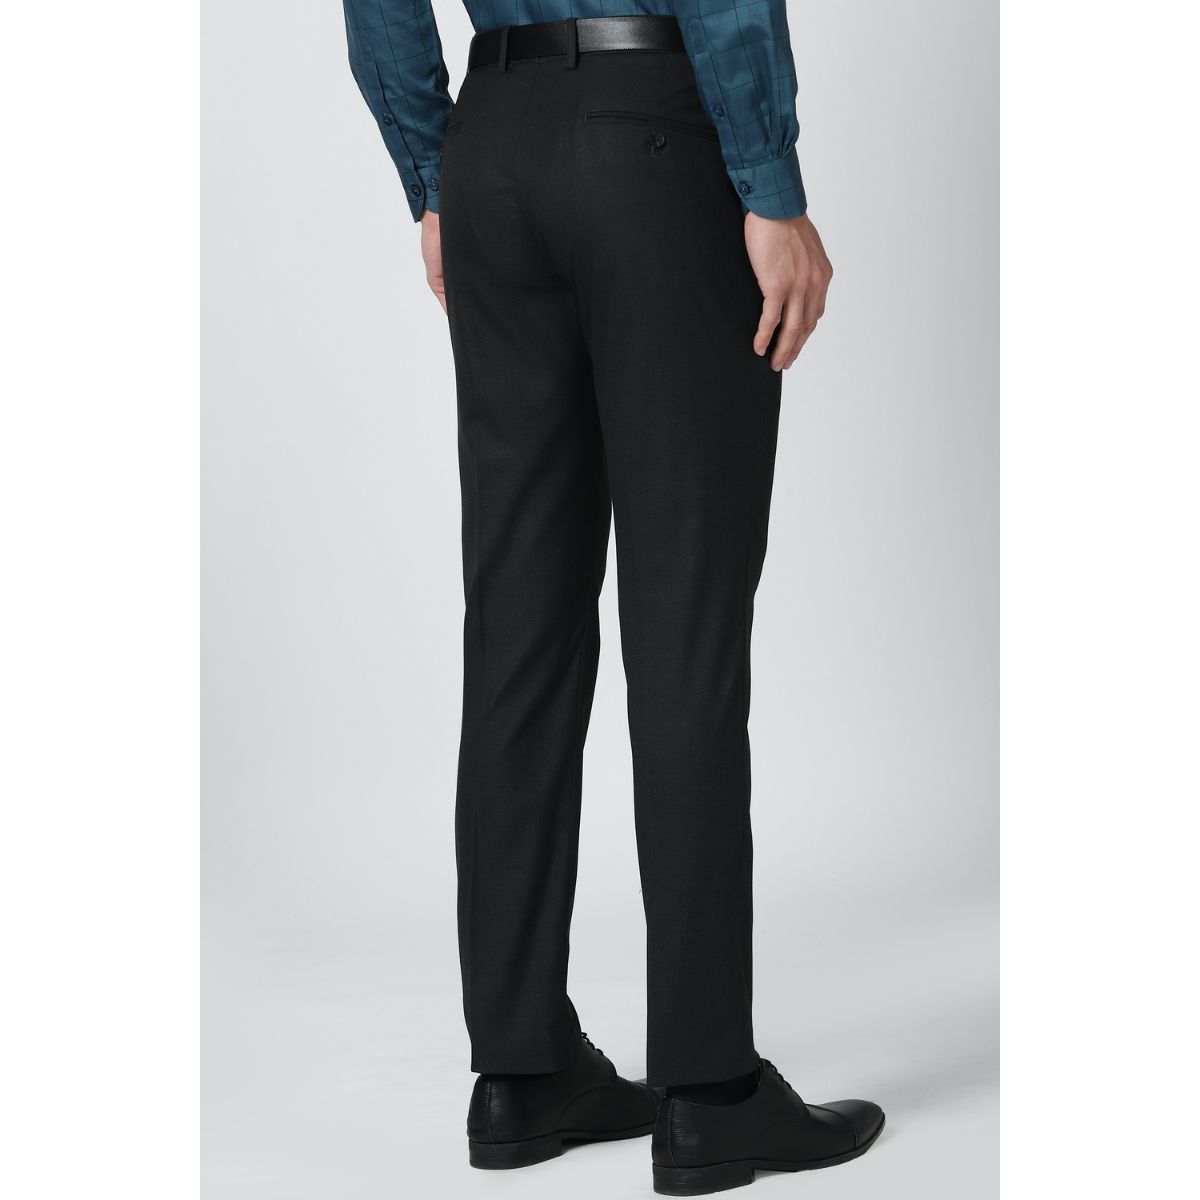 Buy Men Black Solid Slim Fit Formal Trousers Online - 556941 | Peter England